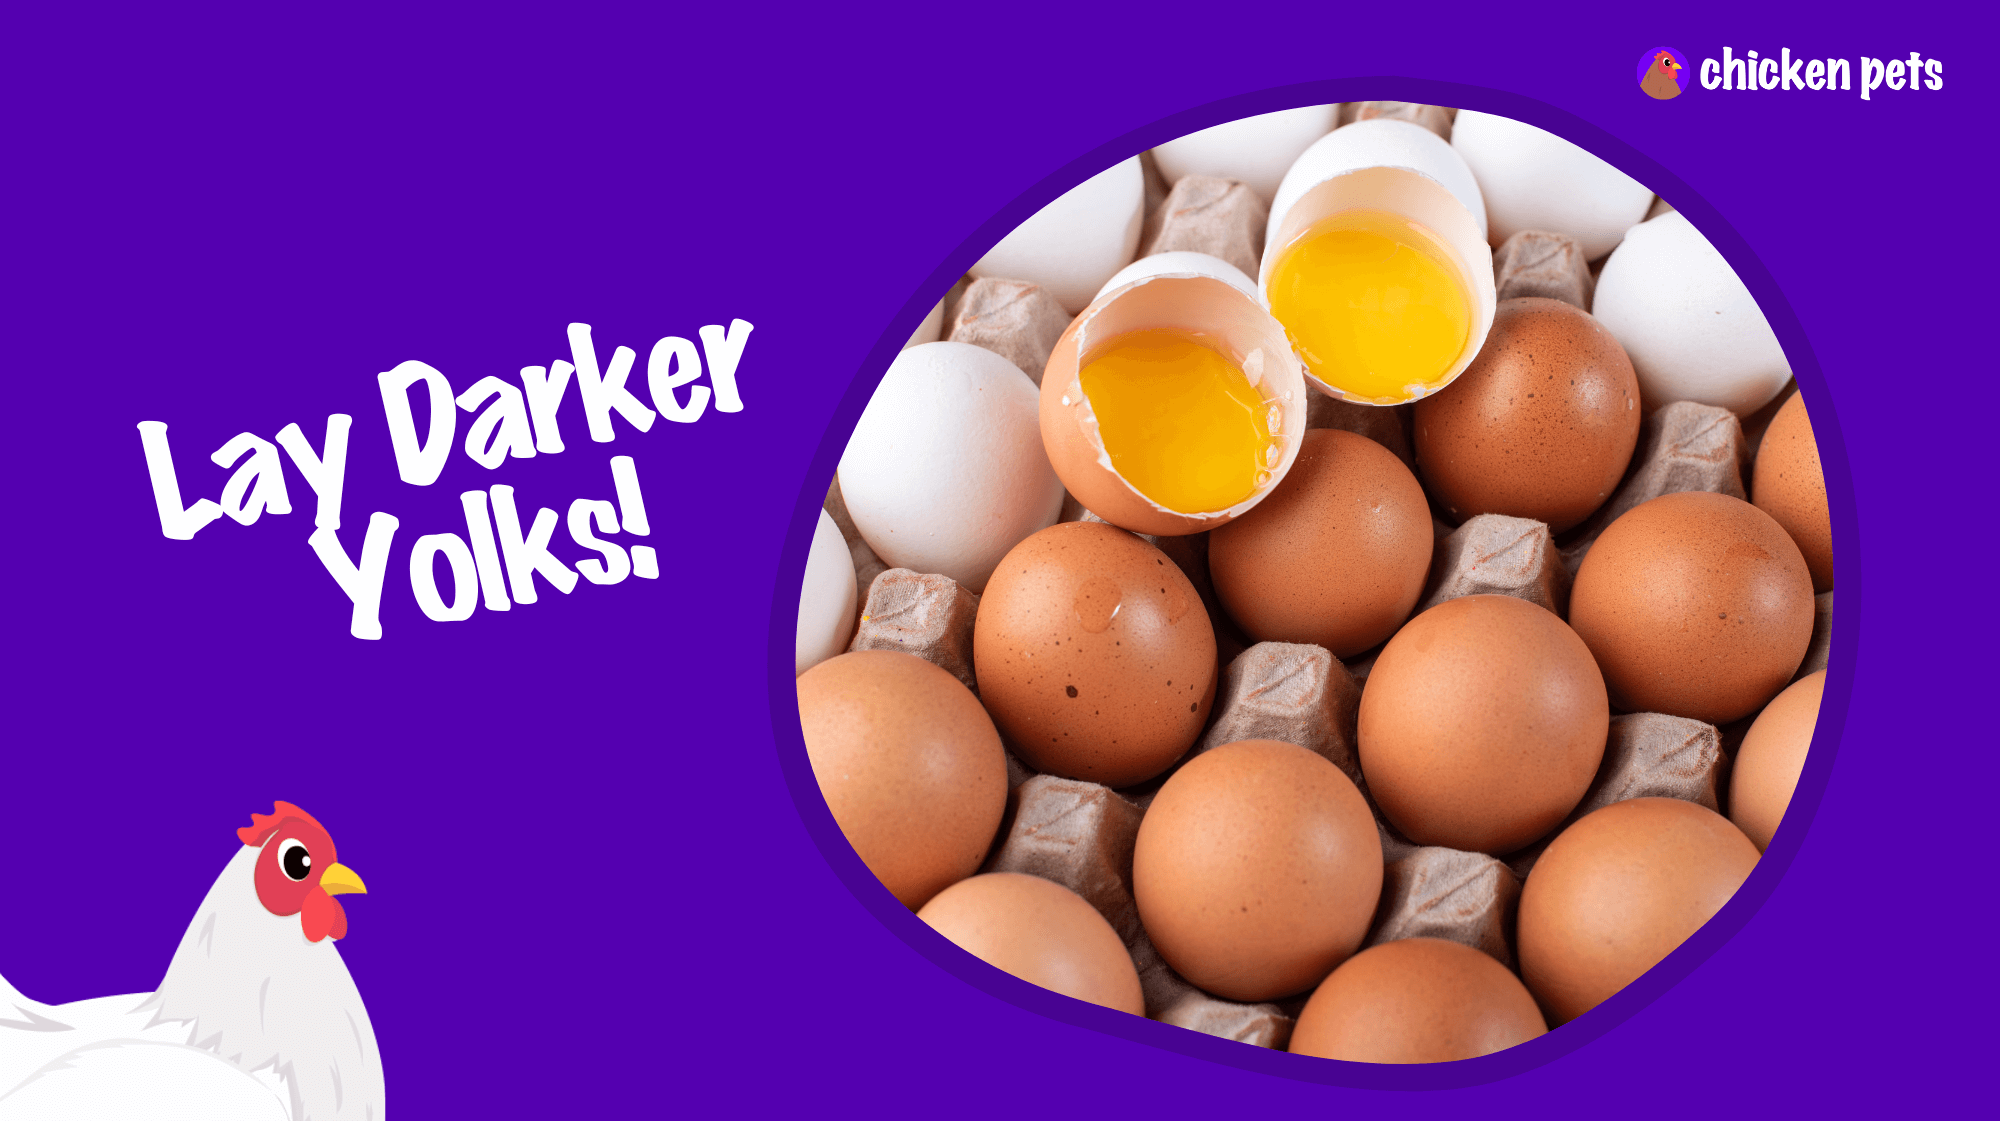 get chickens to lay darker yolks